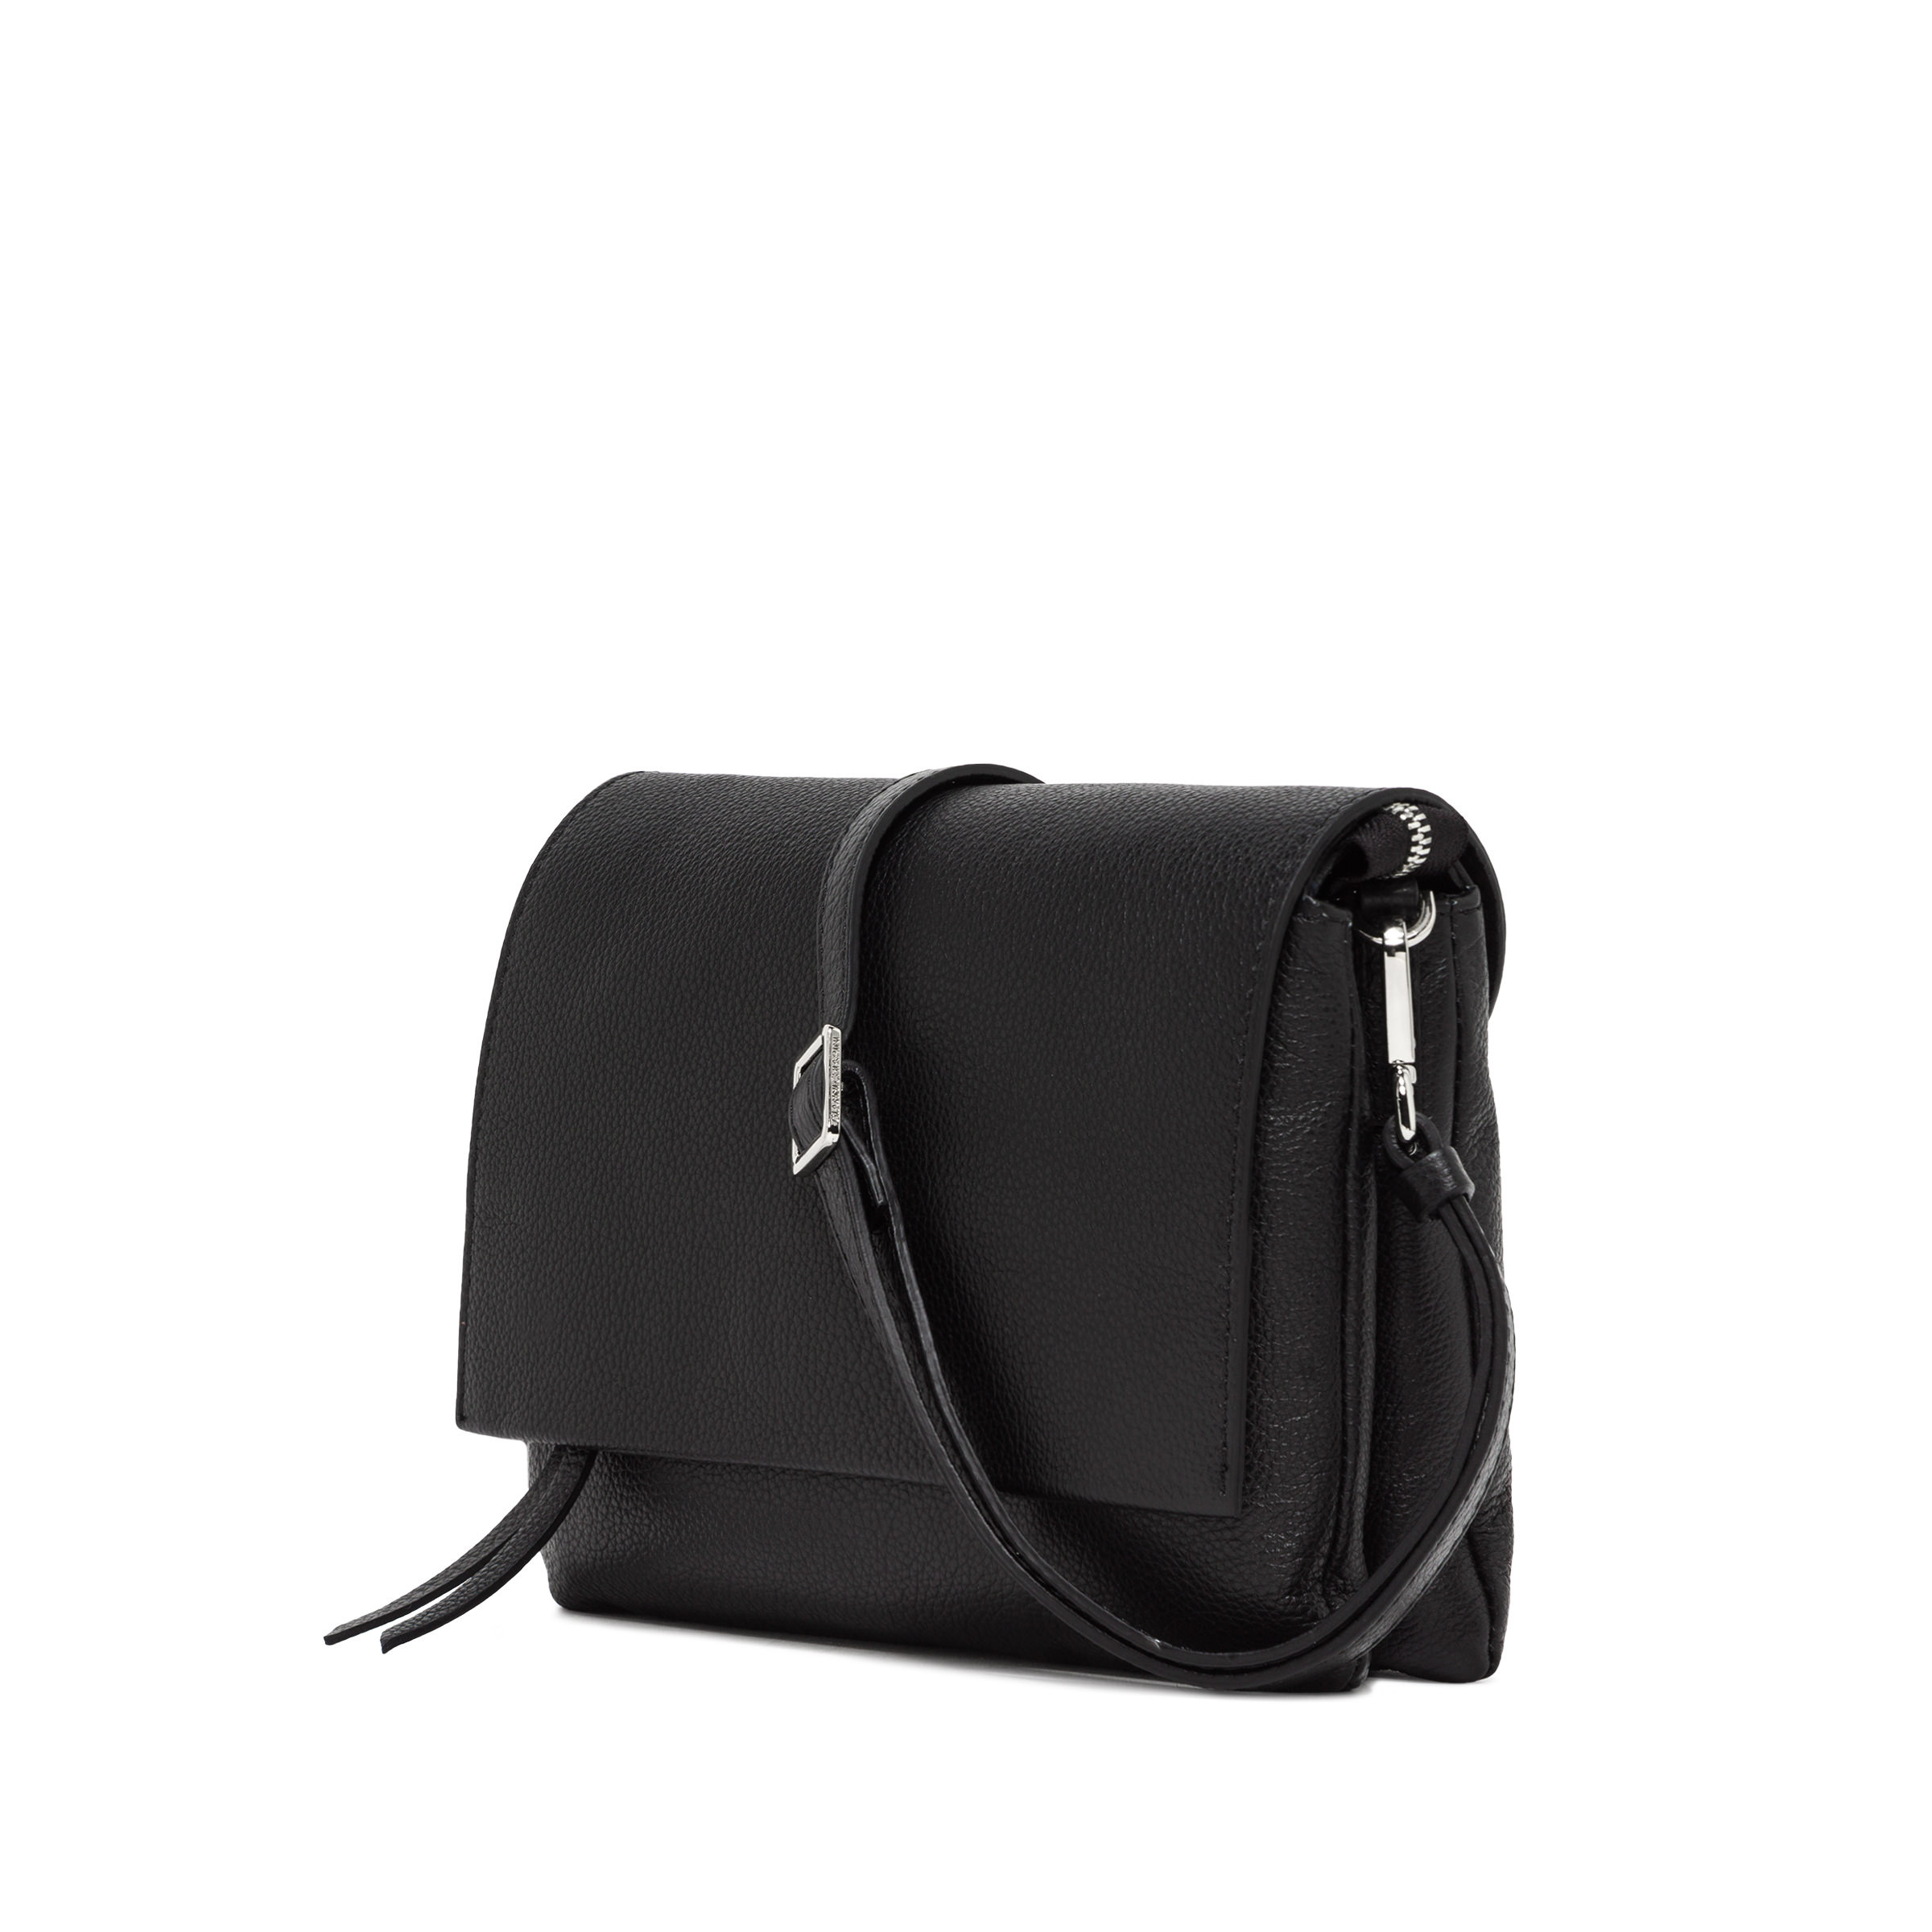 Gianni Chiarini - Three leather bag, Black, large image number 1